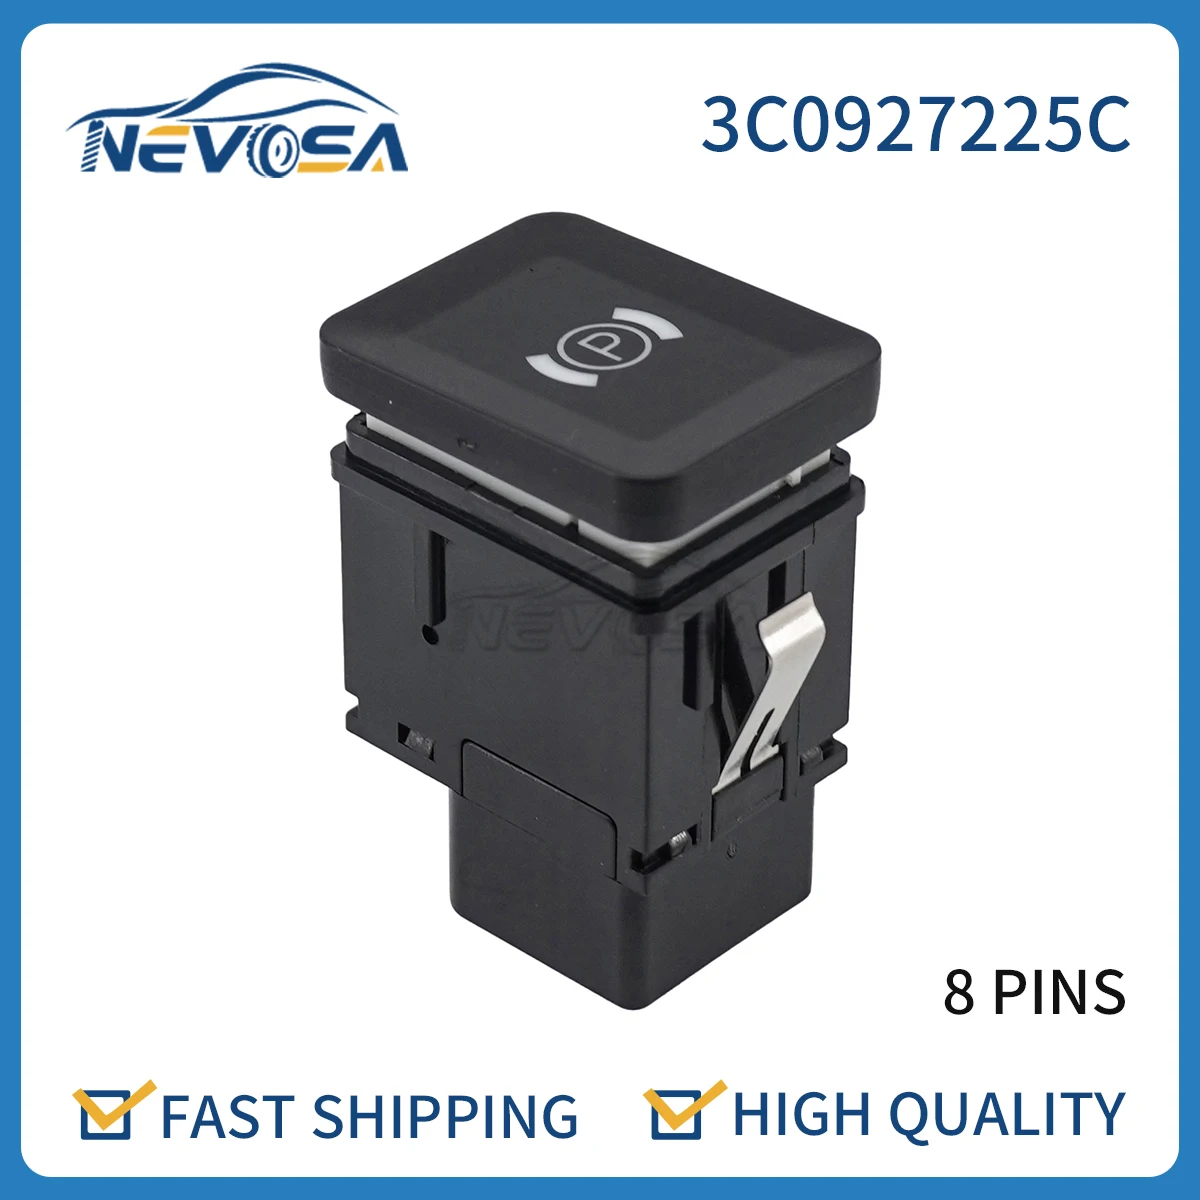 

Nevosa 3C0927225C Electrical Car Parking Hand Brake Control Switch Handbrake Button For VW Passat B6 CC 3C 2006-2012 3C0927225B